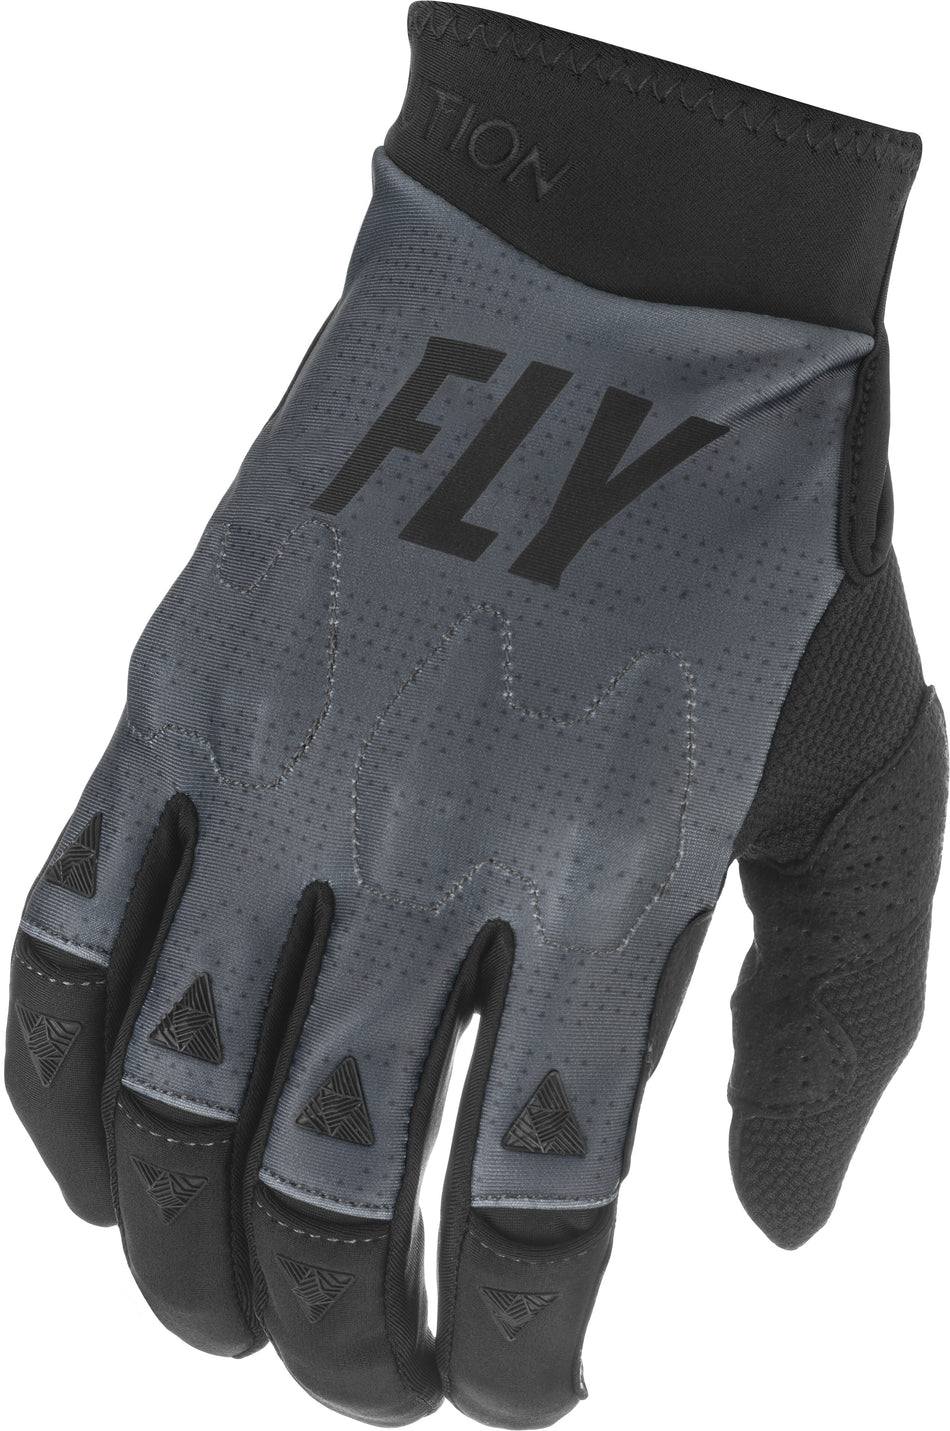 FLY RACING Evolution Dst Gloves Grey/Black/Stone Sz 12 374-11612